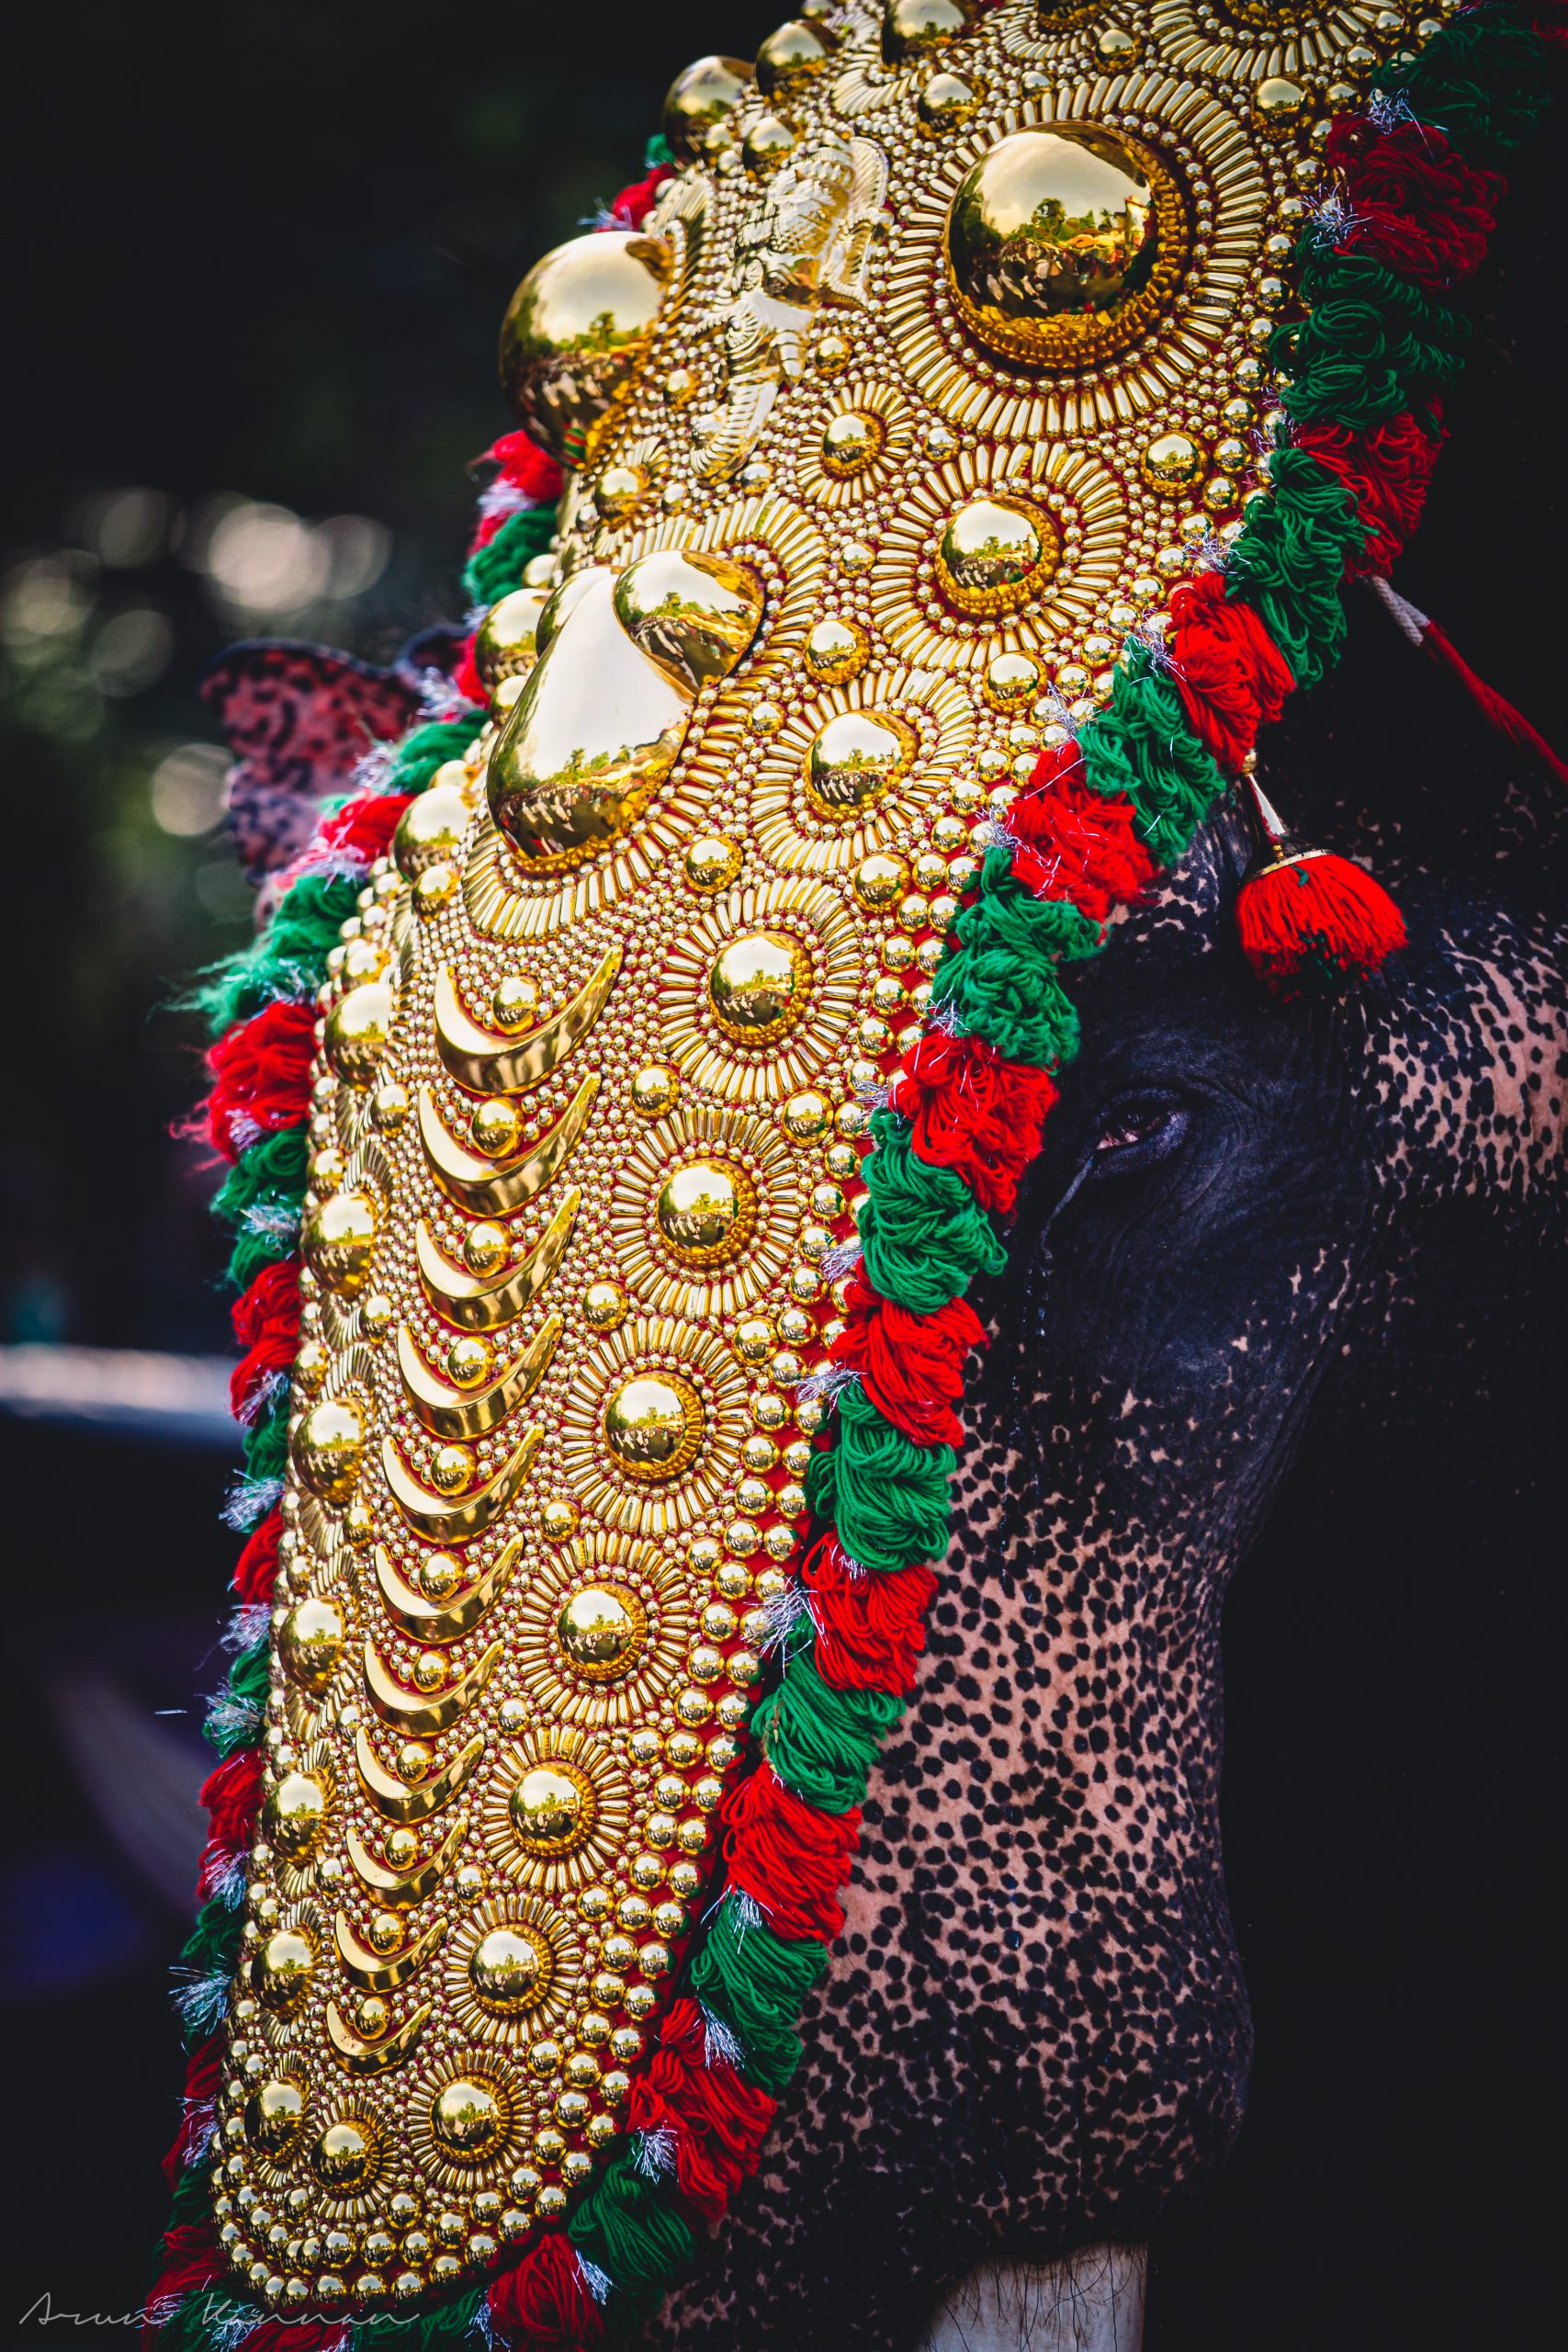 Indian elephant festival